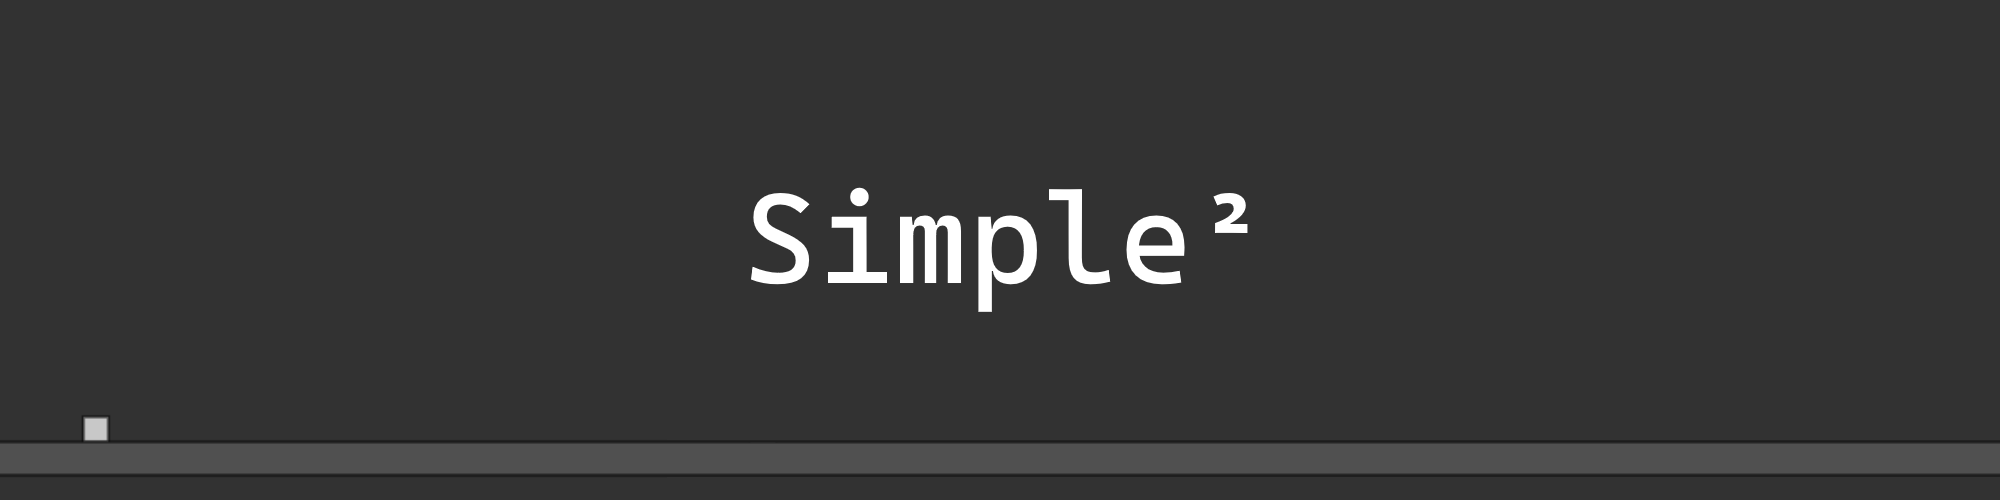 Simple² - Demo